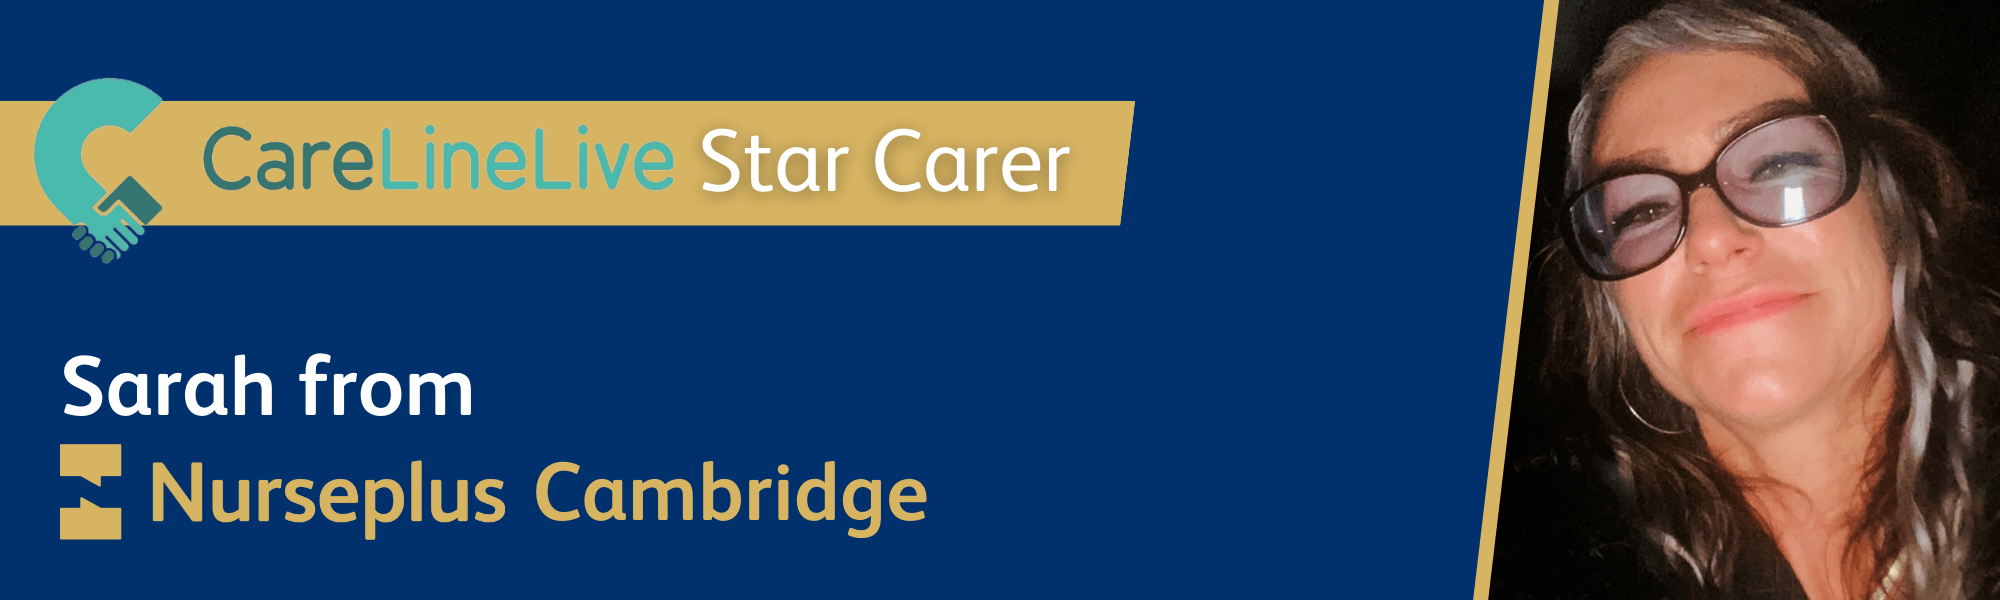 Star Carer of the month: Sarah from Nurseplus Cambridge